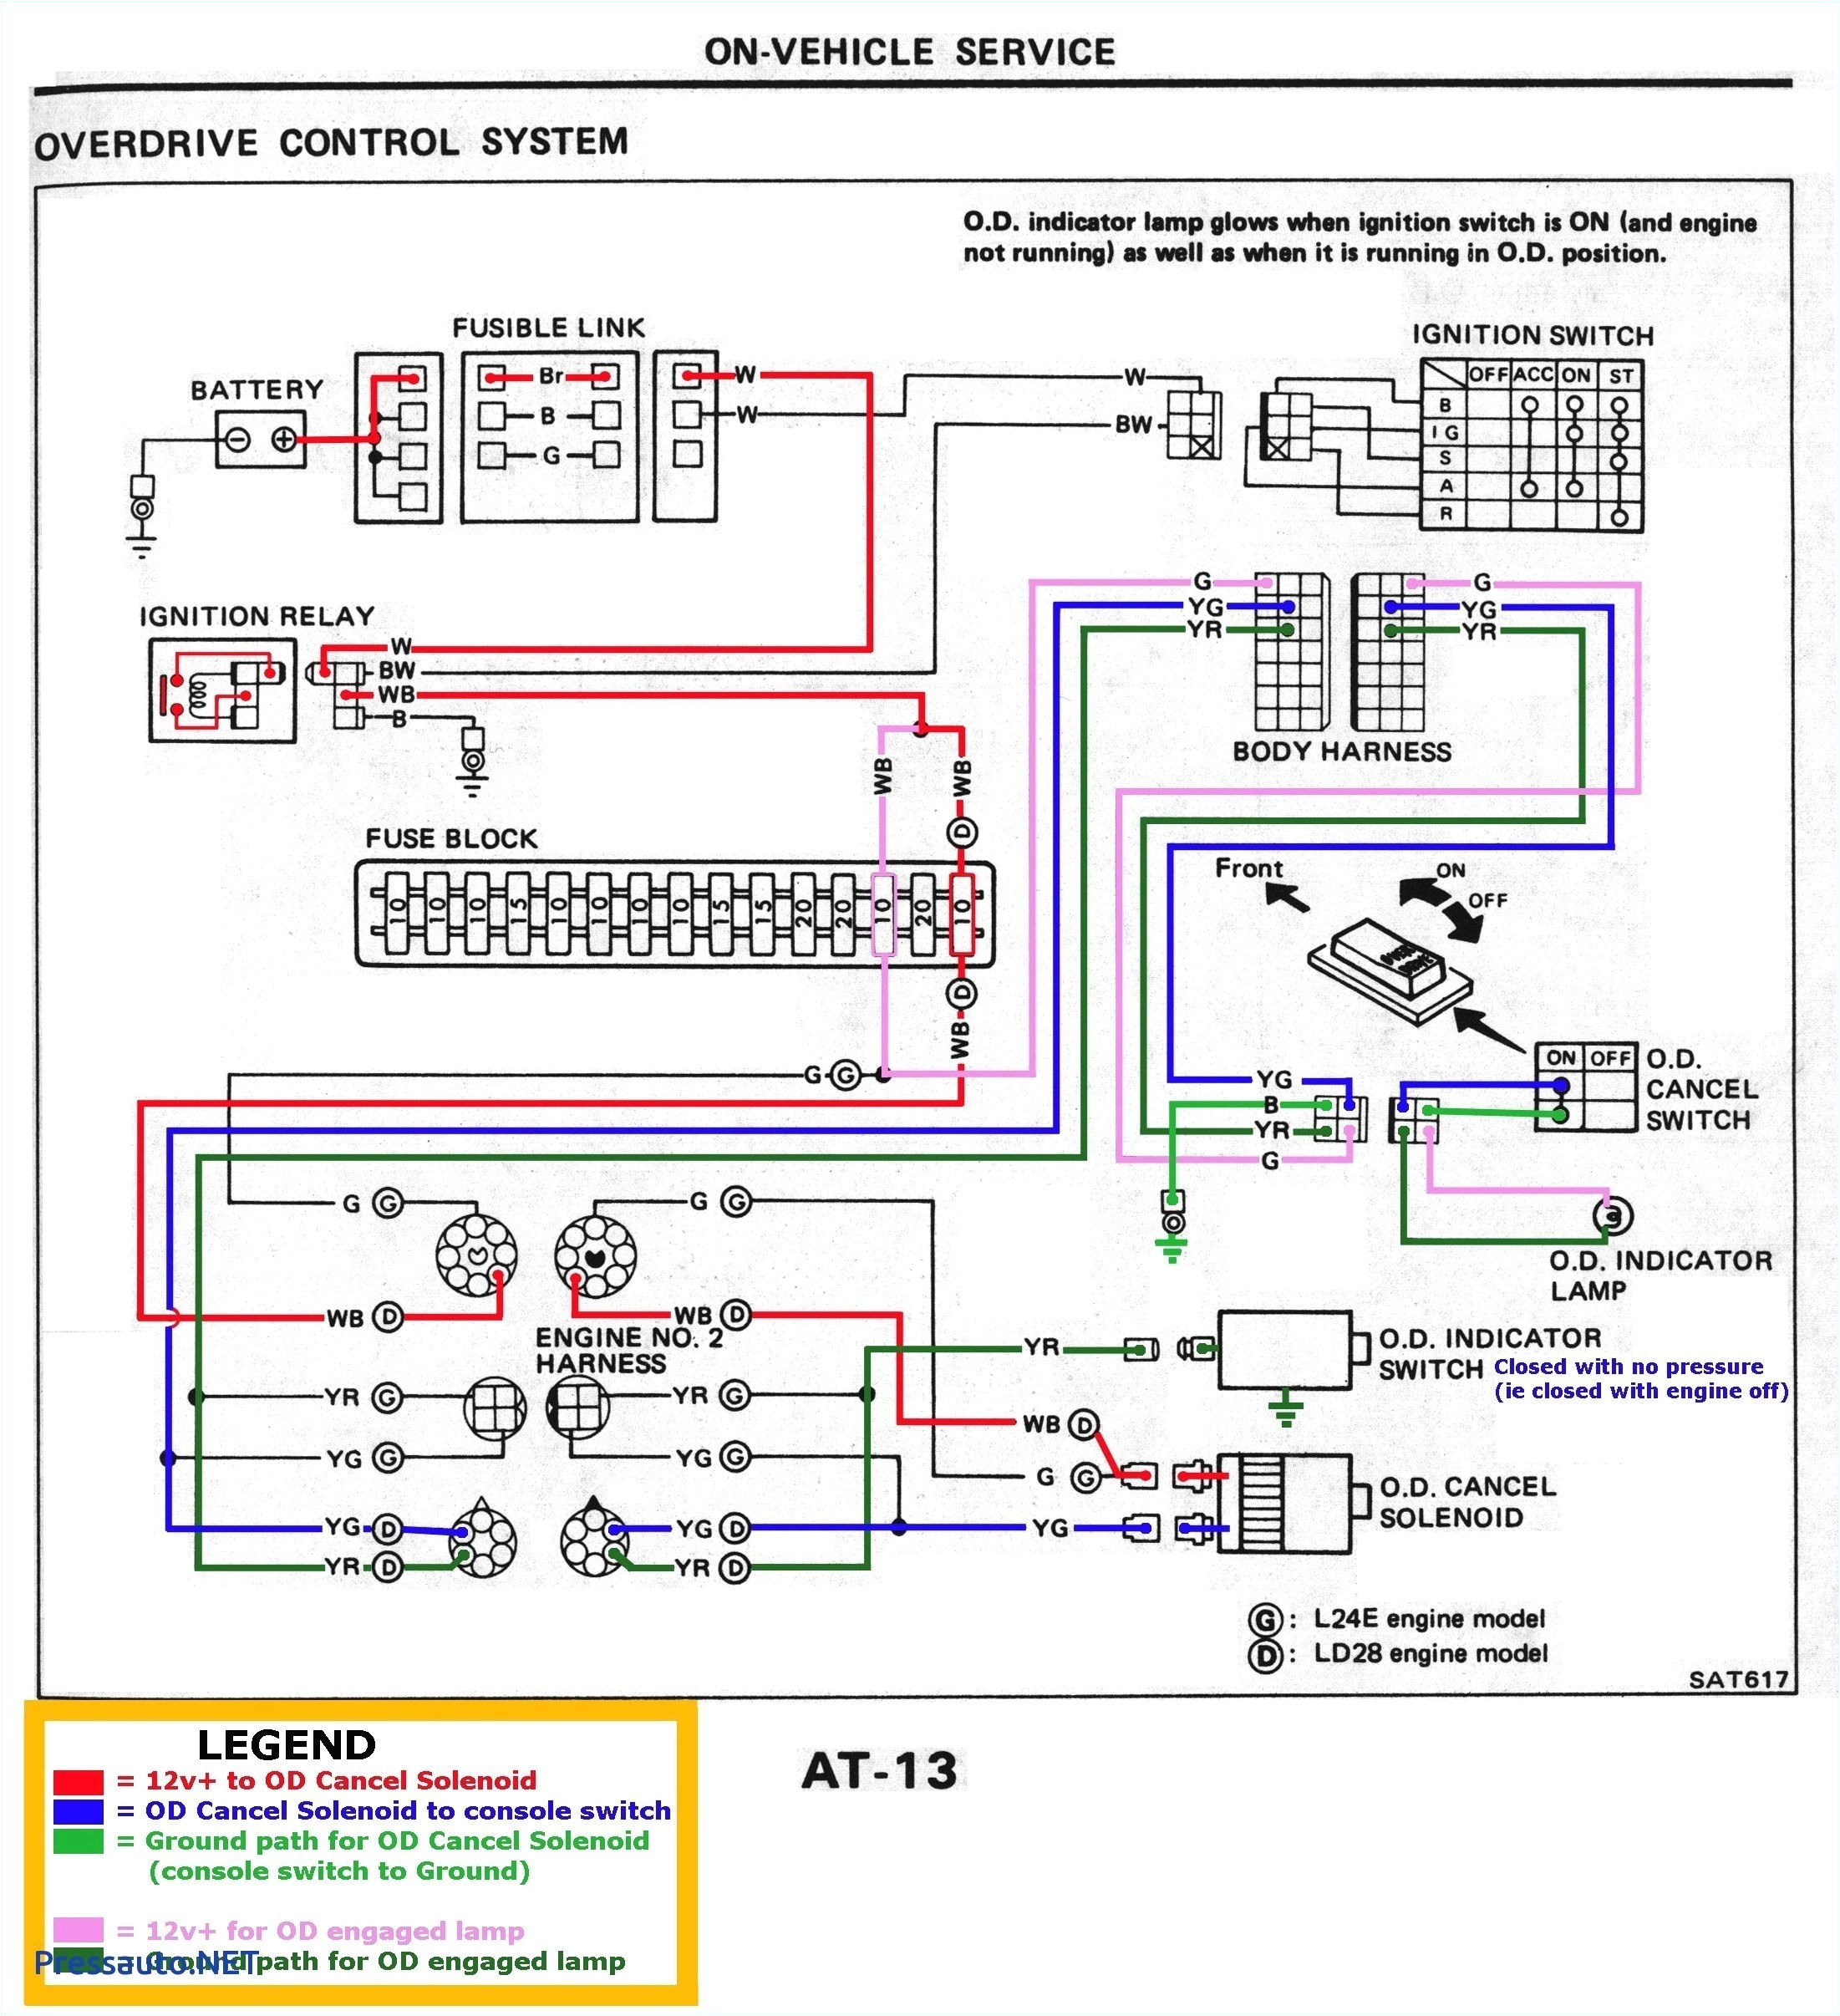 vespa wiring diagram free blog wiring diagram vespa wiring diagram free